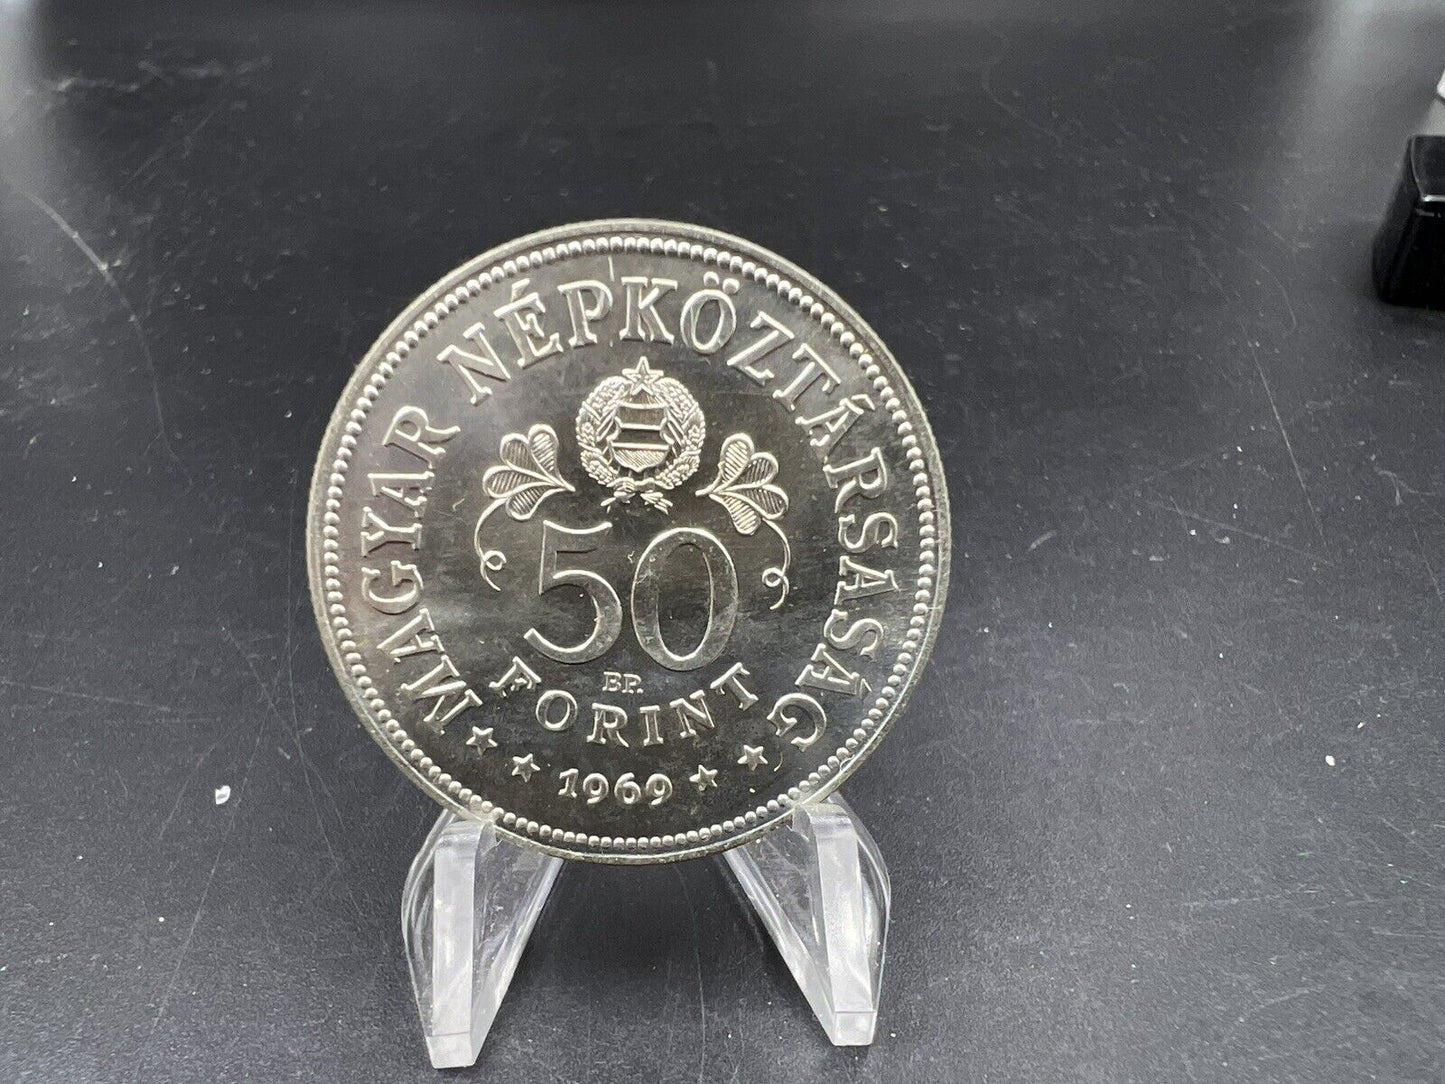 HUNGARY - Republic of Councils - 50 Forint 1969 - Km-589 - GEM BU Silver Coin